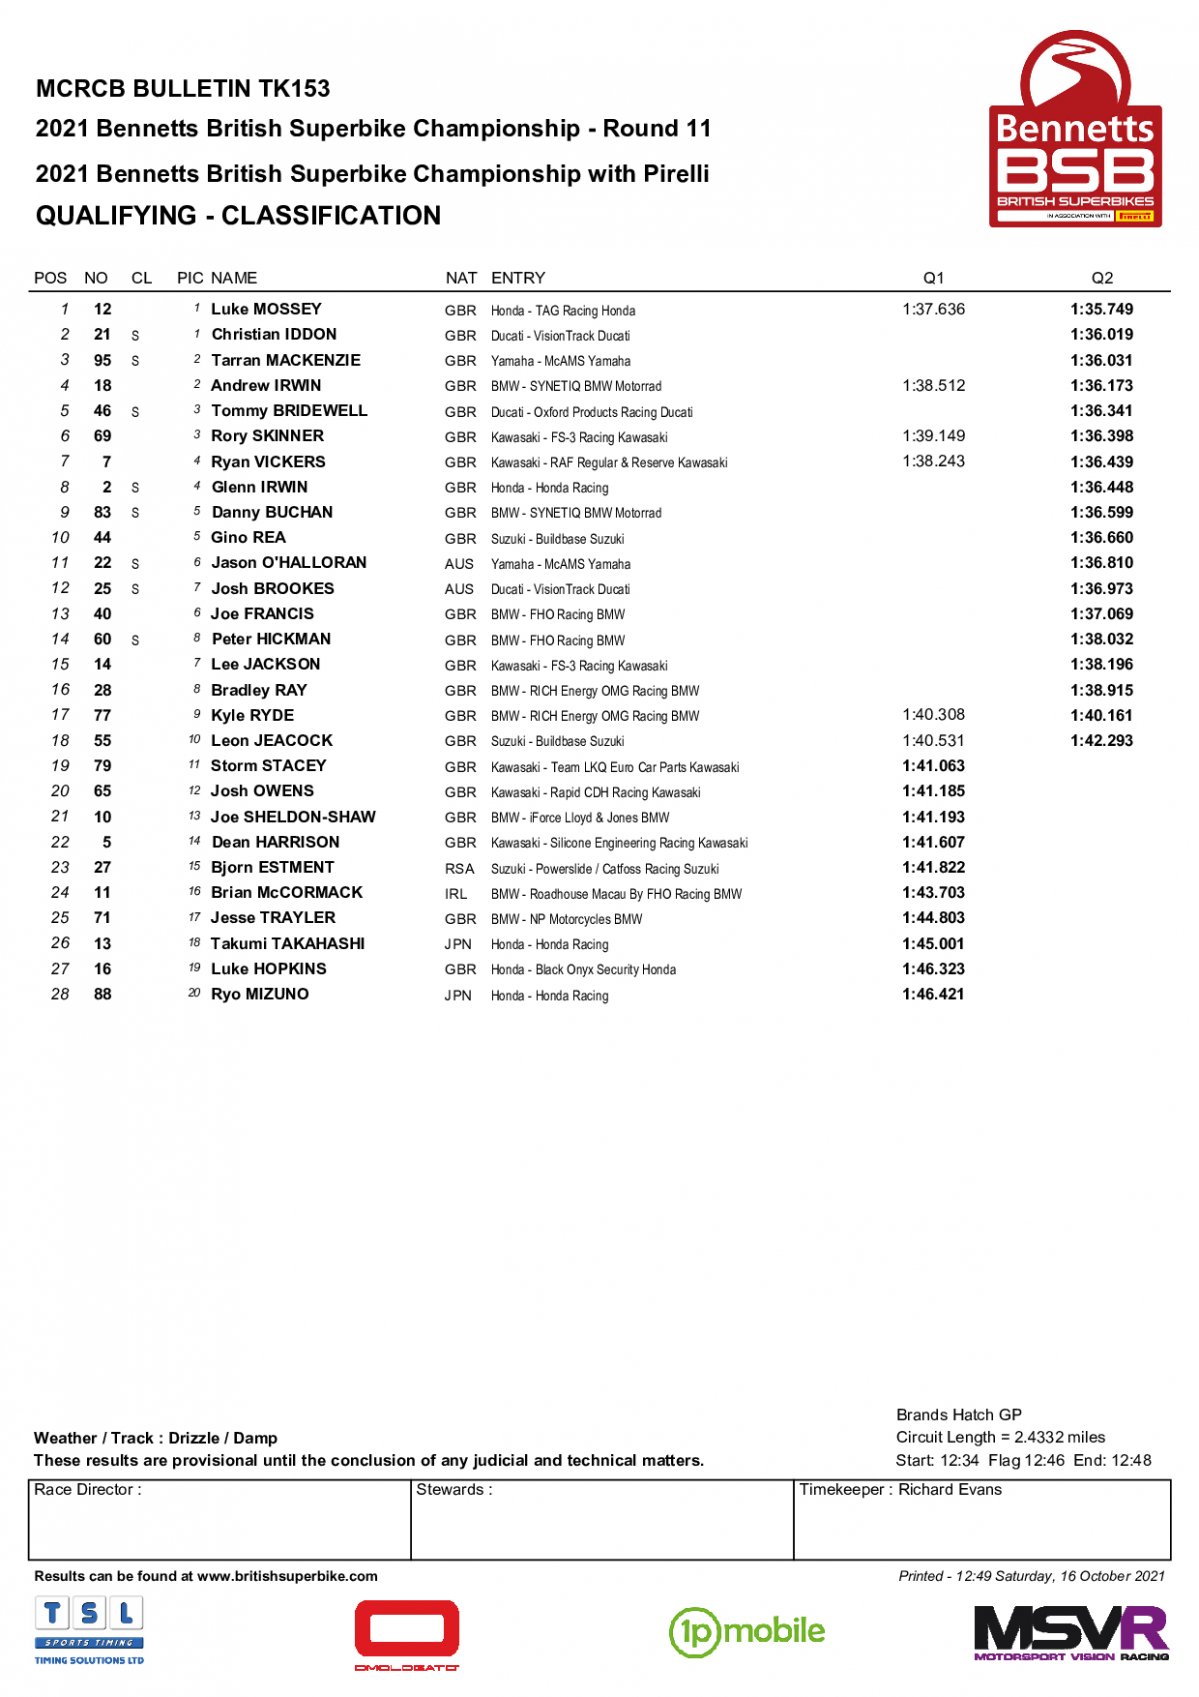 Результаты квалификации Final Showdown British Superbike, Brands Hatch (16/10/2021)